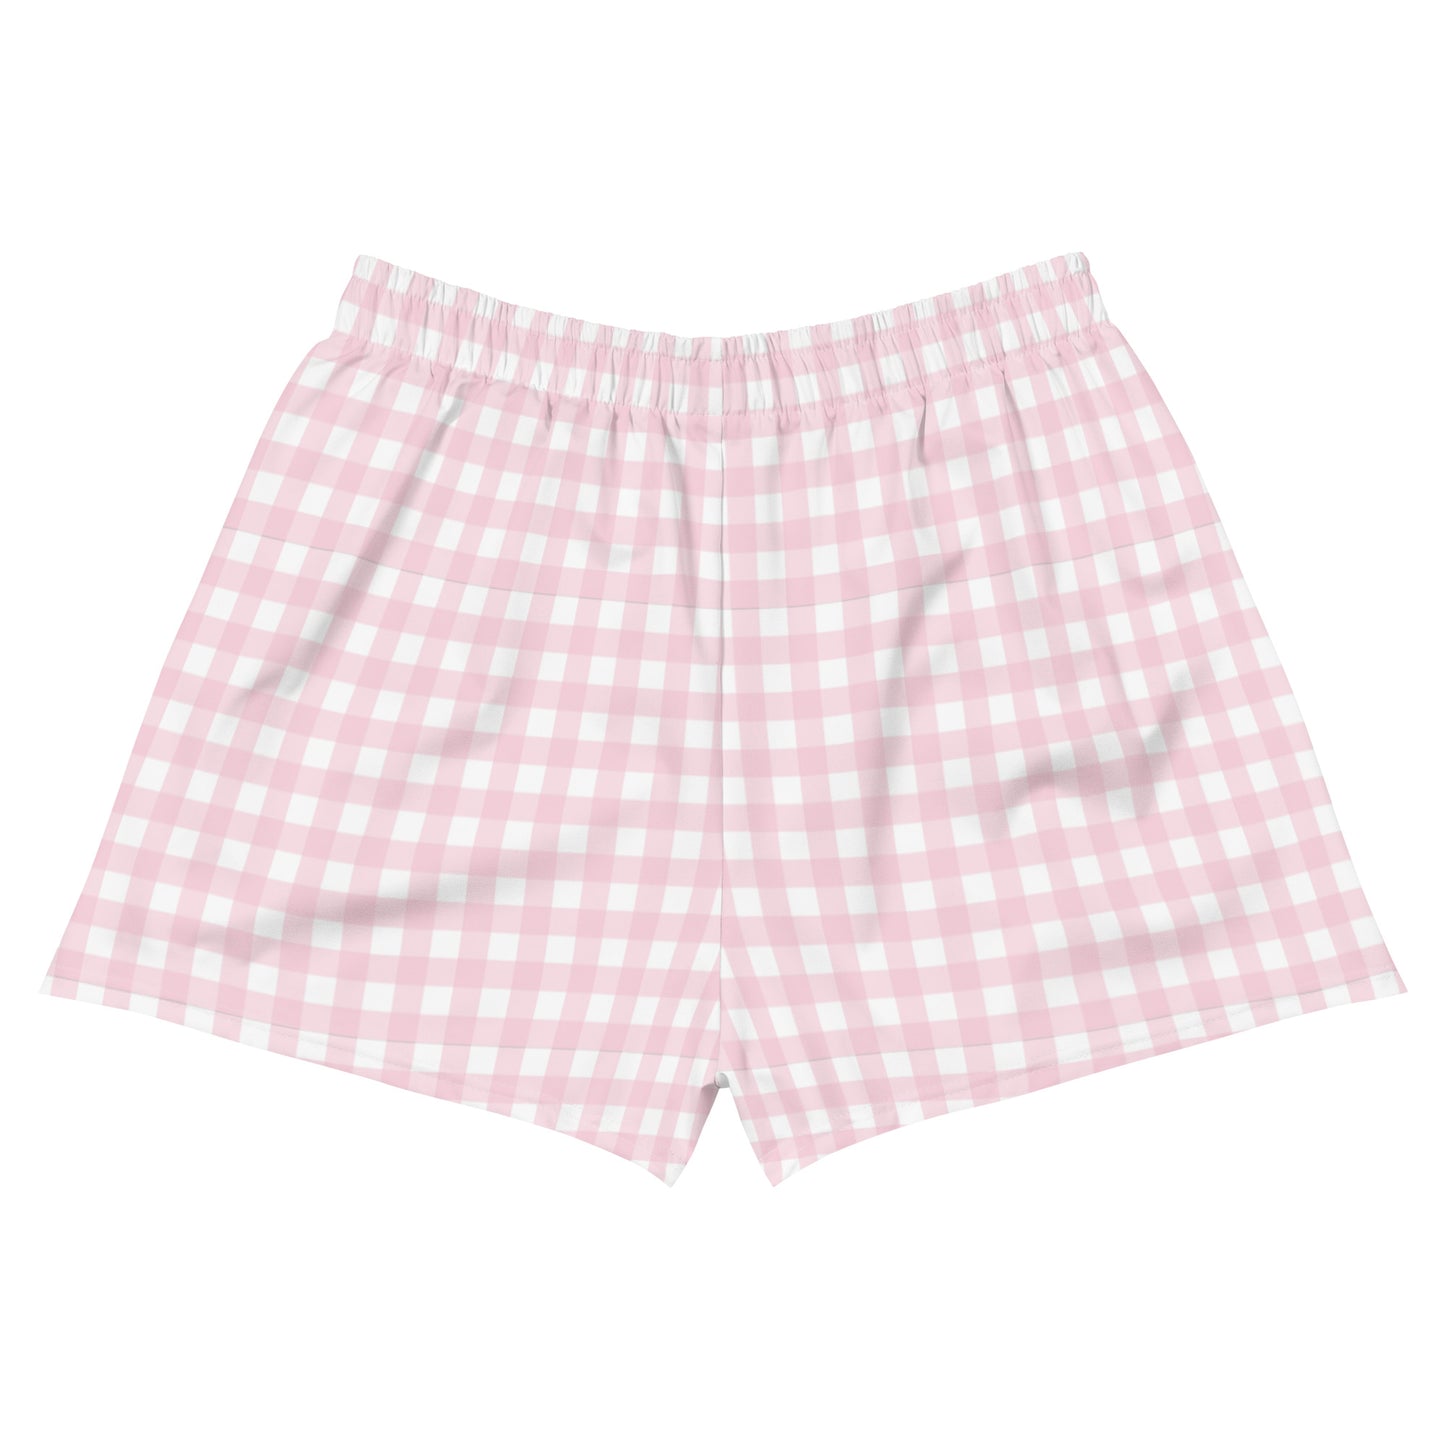 Preppy Pink Gingham Shorts